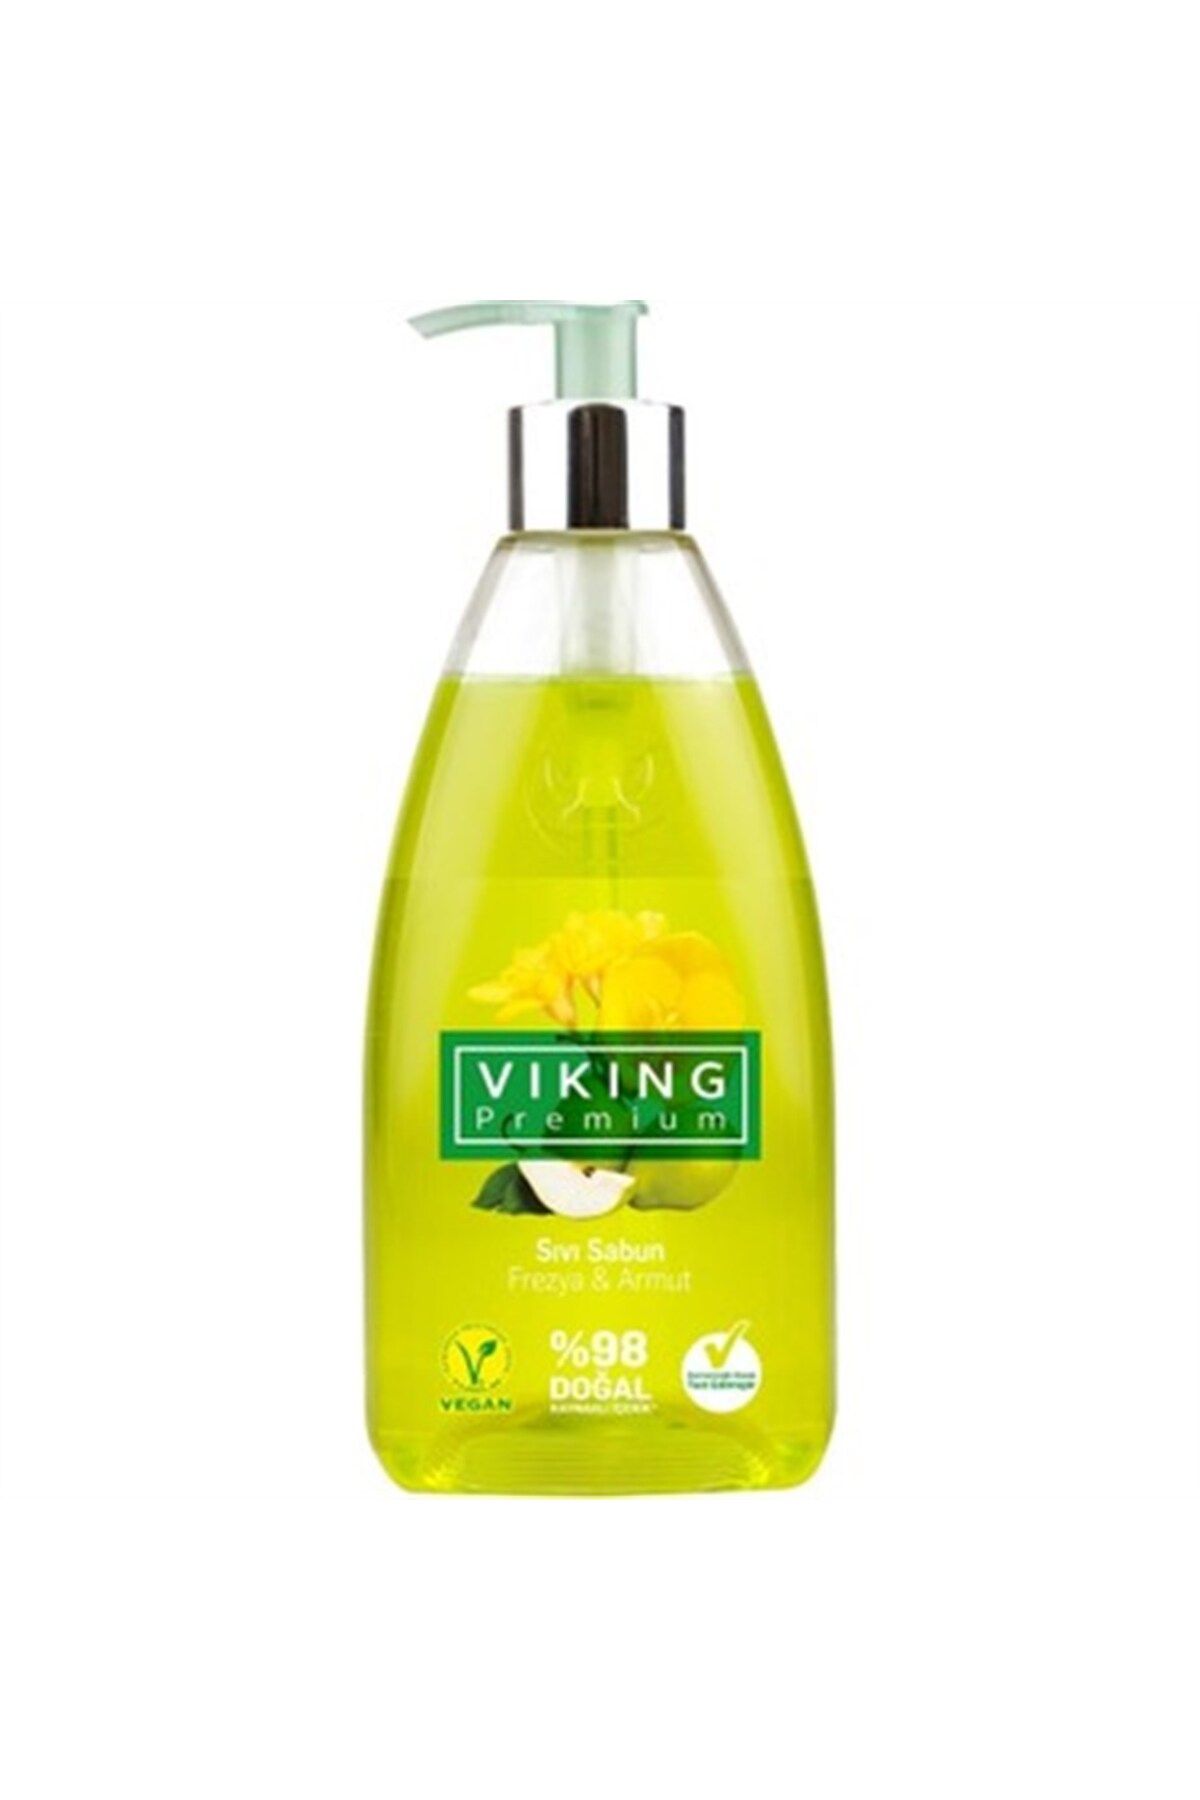 Viking Premium Sıvı El Sabunu Frezya 500 ml